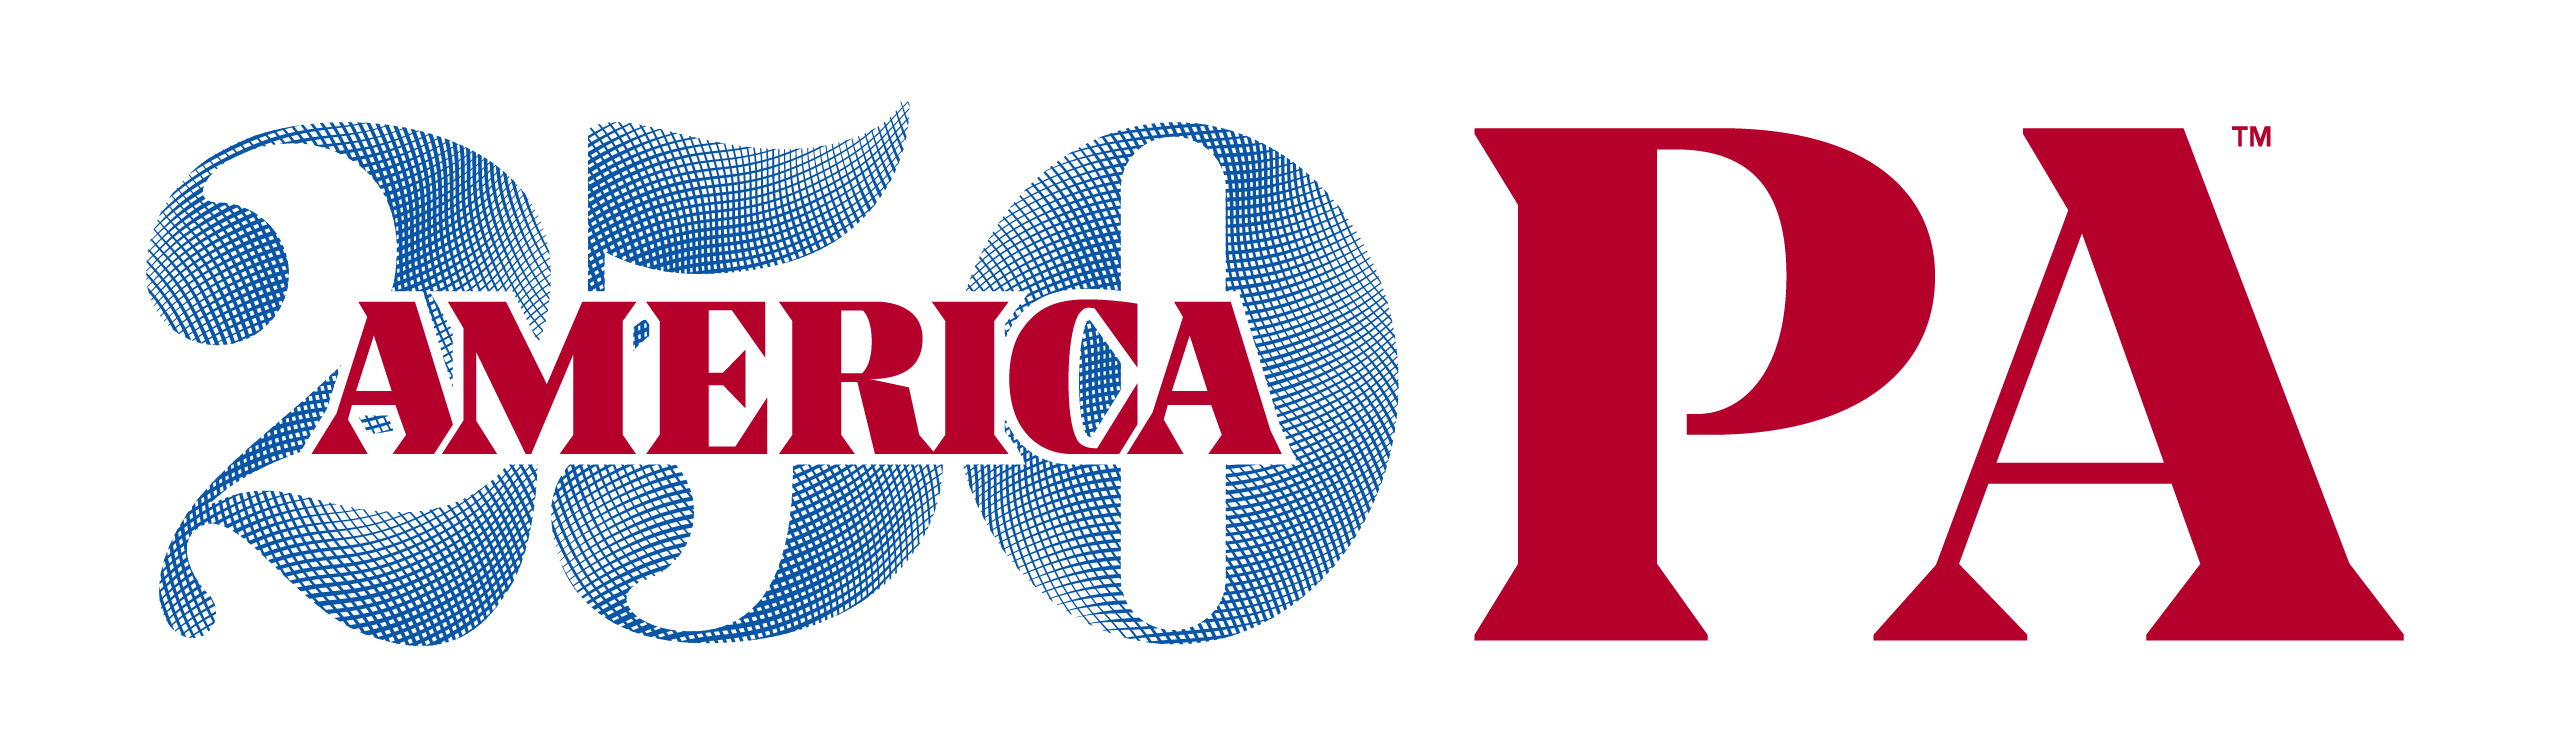 America 250 Pennsylvania logo